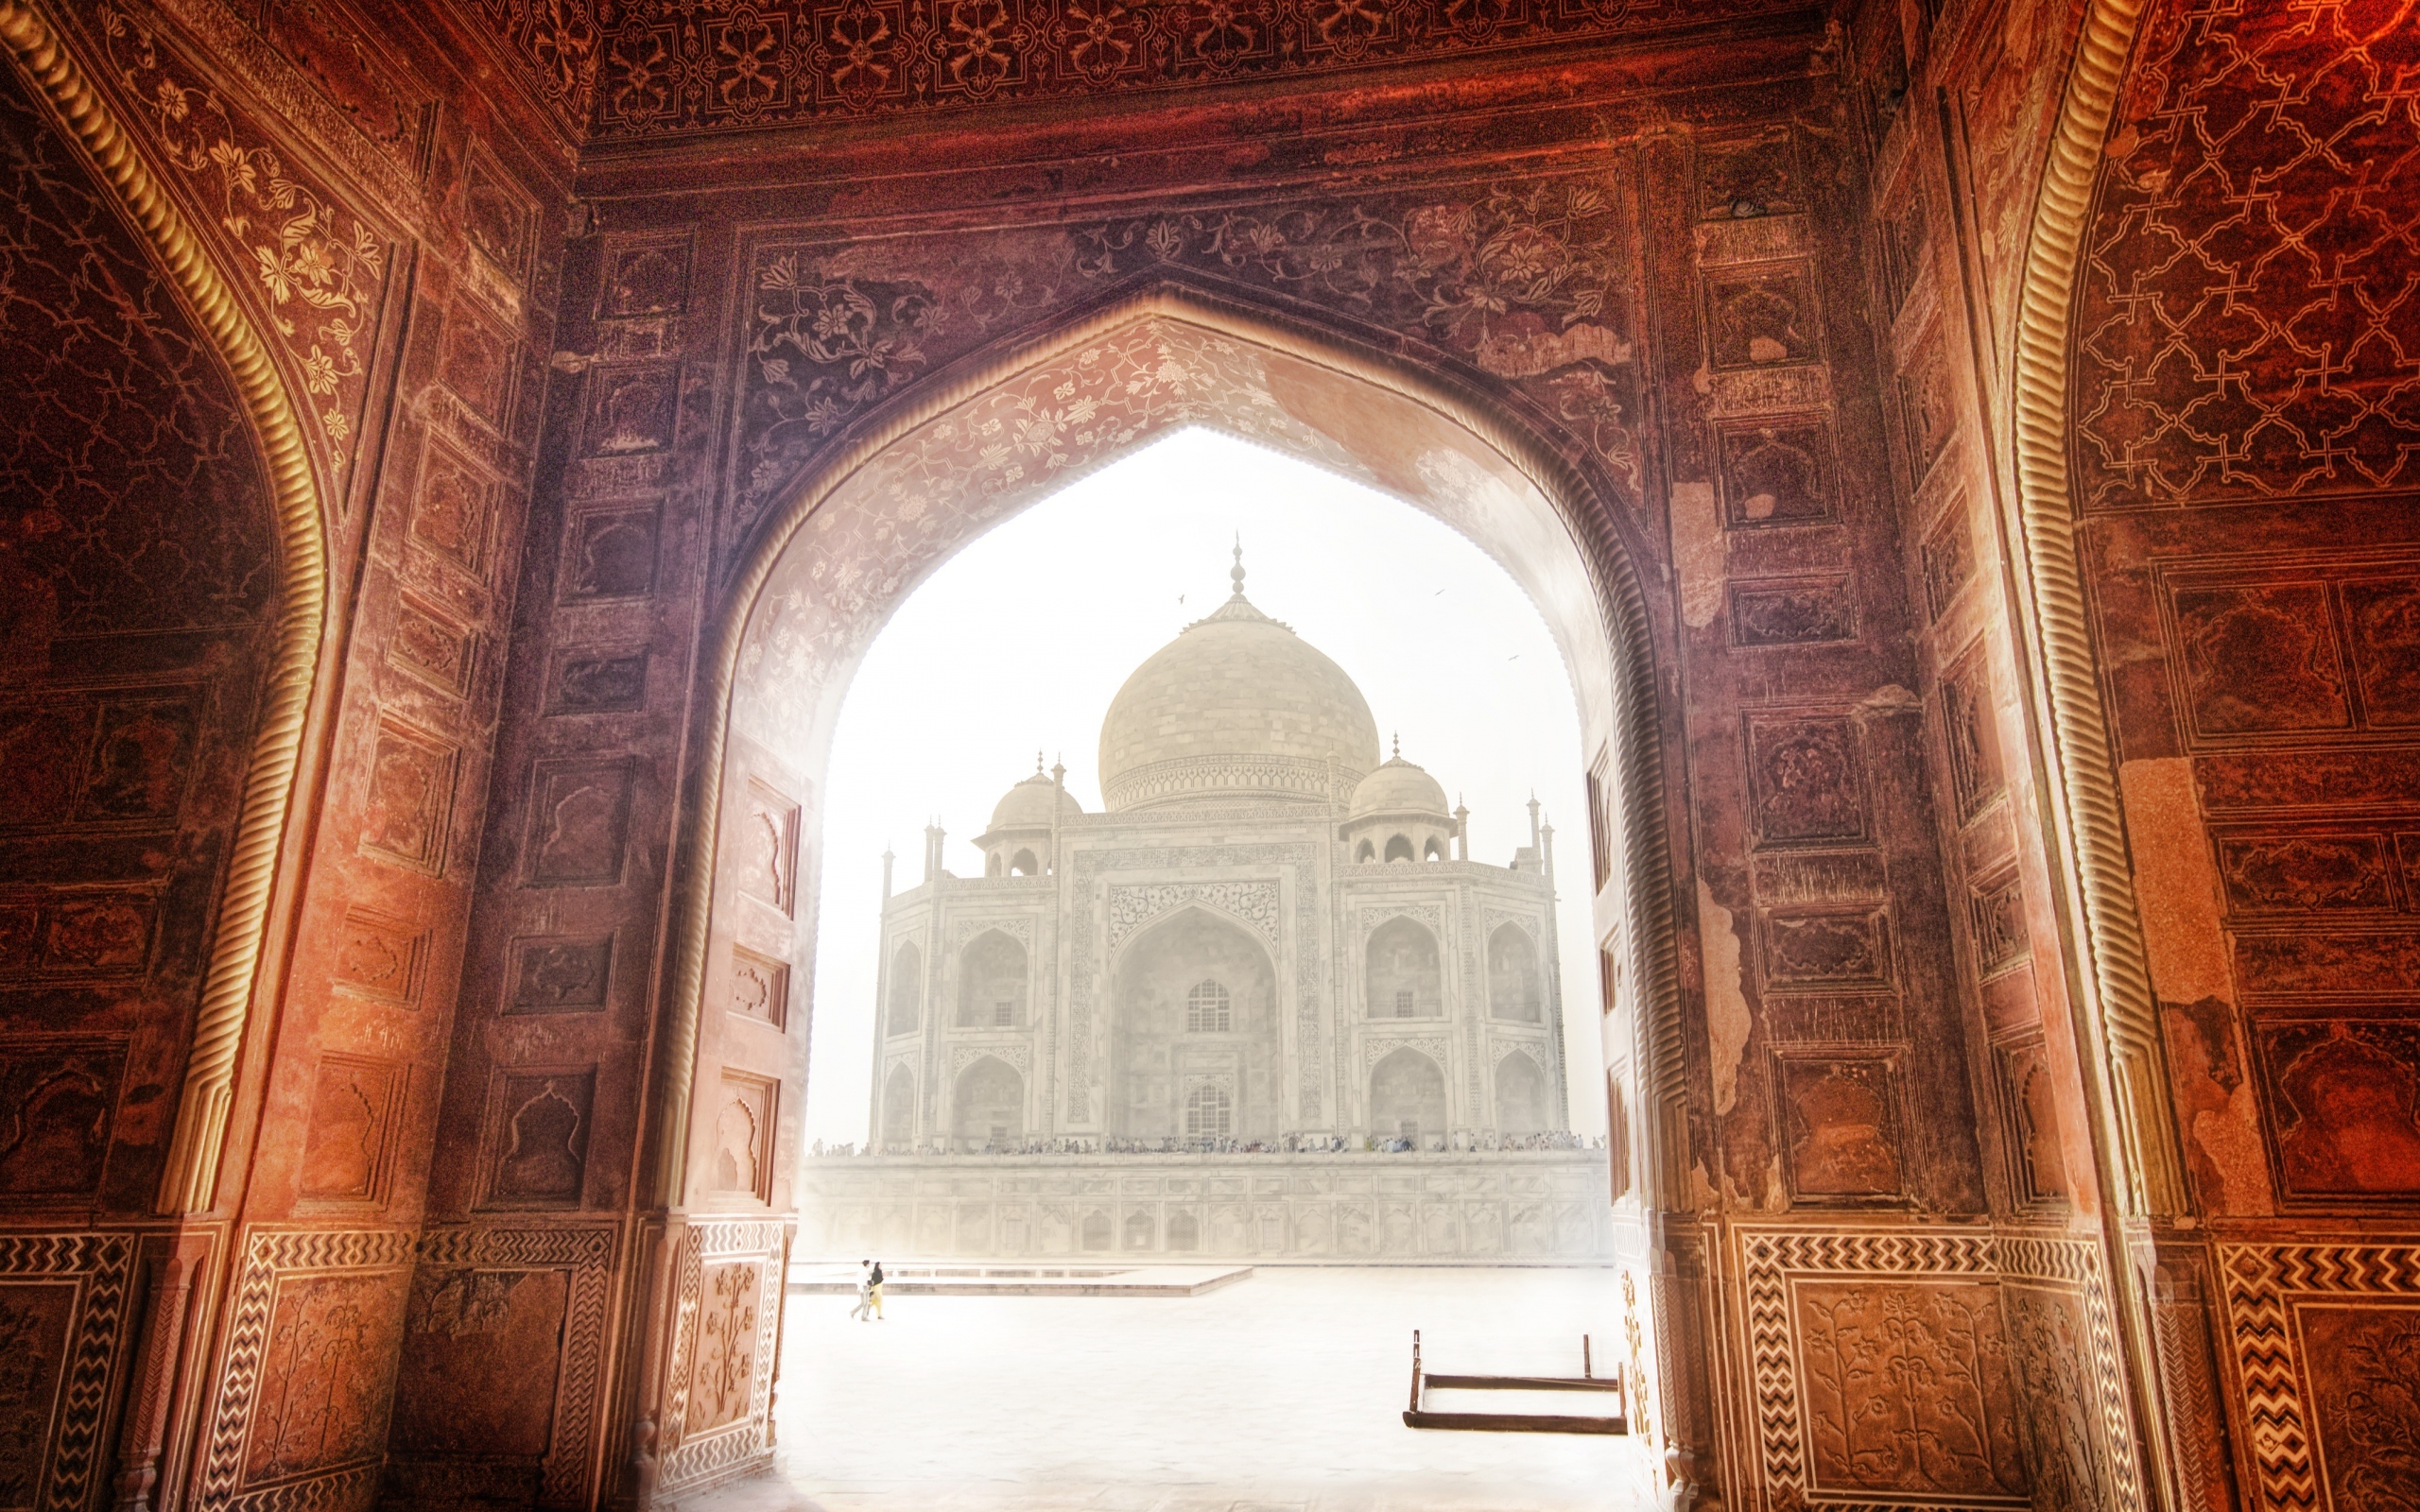 Man Made Taj Mahal 2560x1600